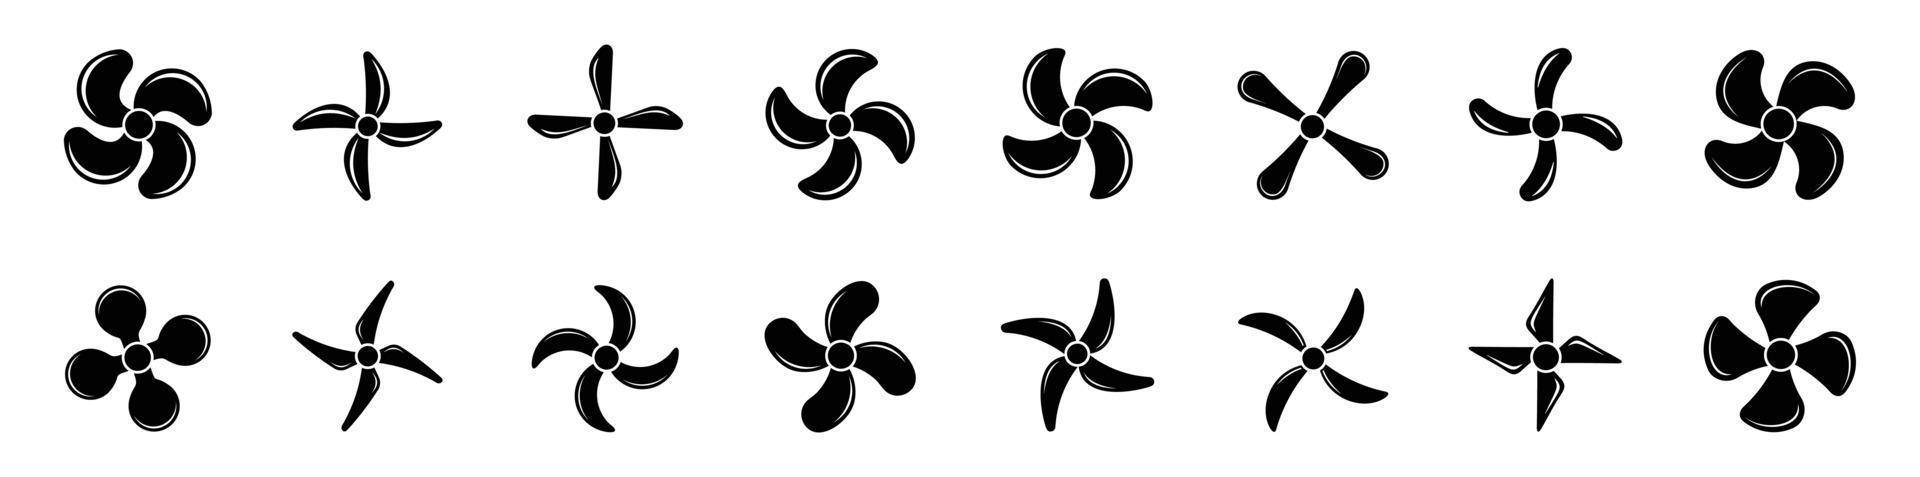 vliegtuig propeller pictogrammen, symbolen ventilator roterende vector illustration.propeller icon set